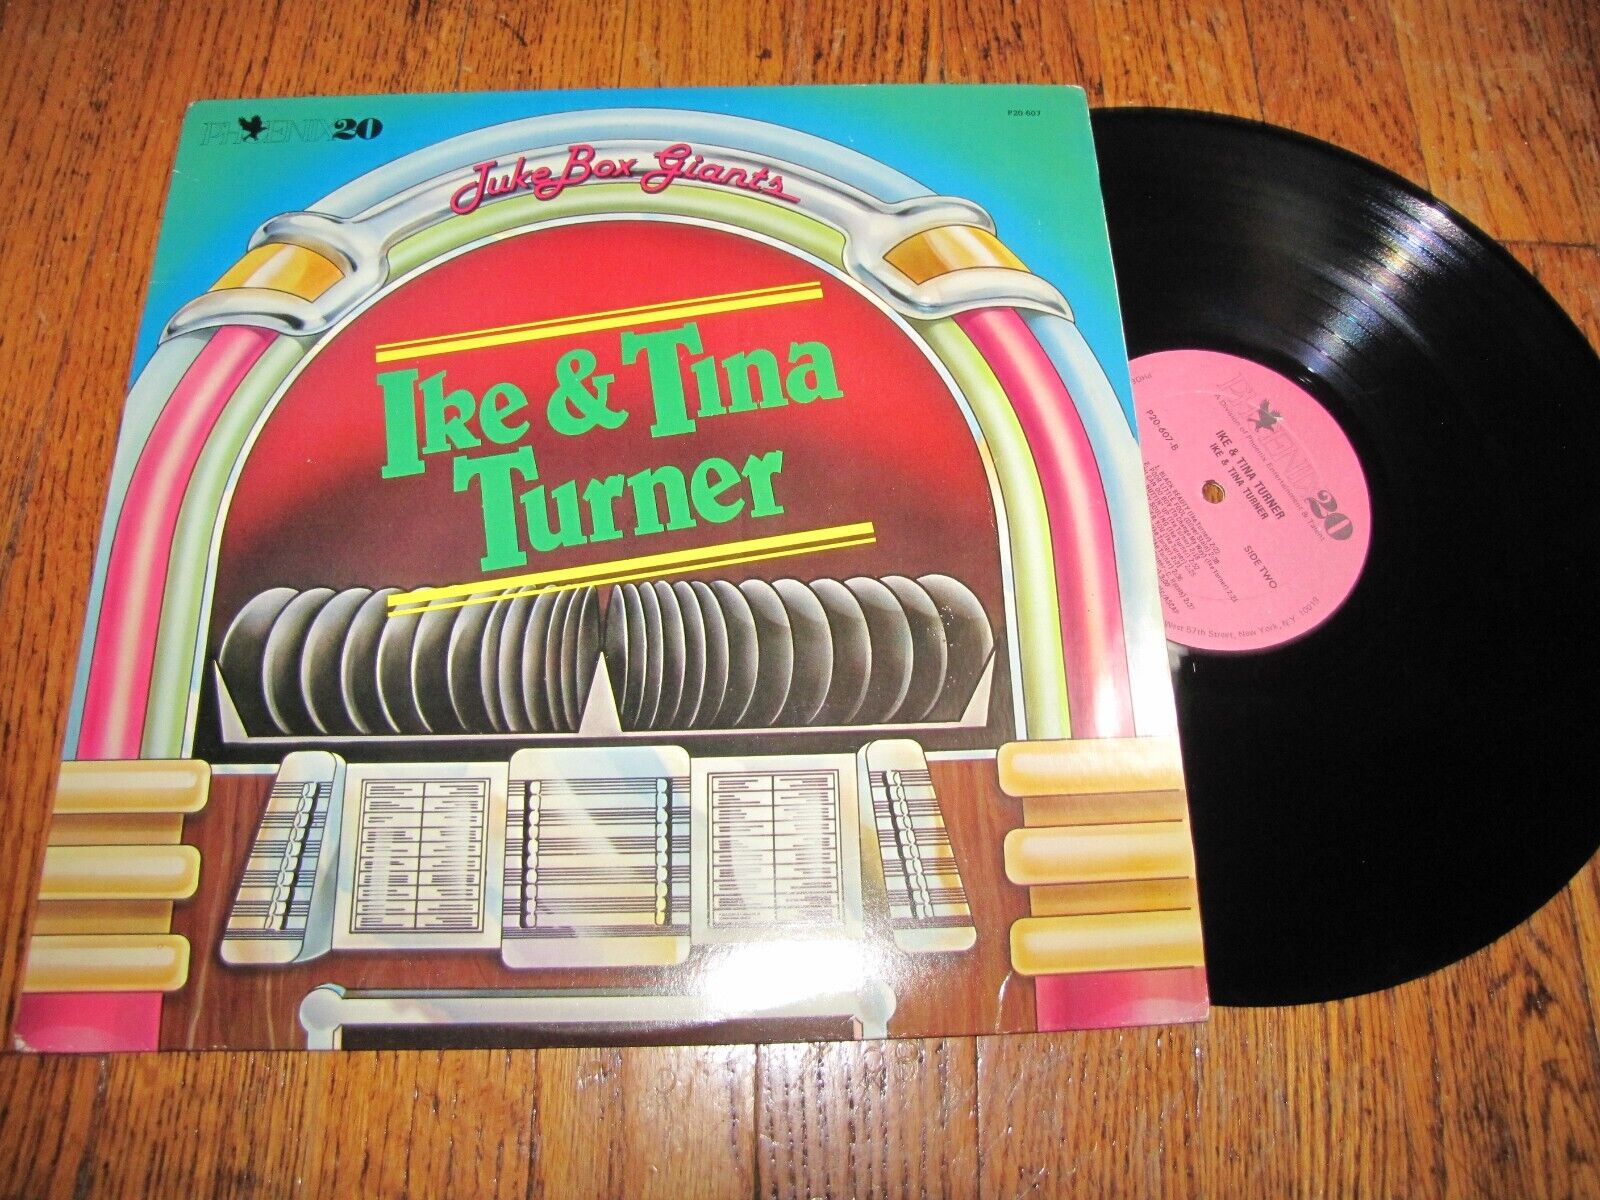 IKE & TUNA TURNER - JUKE BOX GIANTS - PHOENIX 20 RECORDS LP